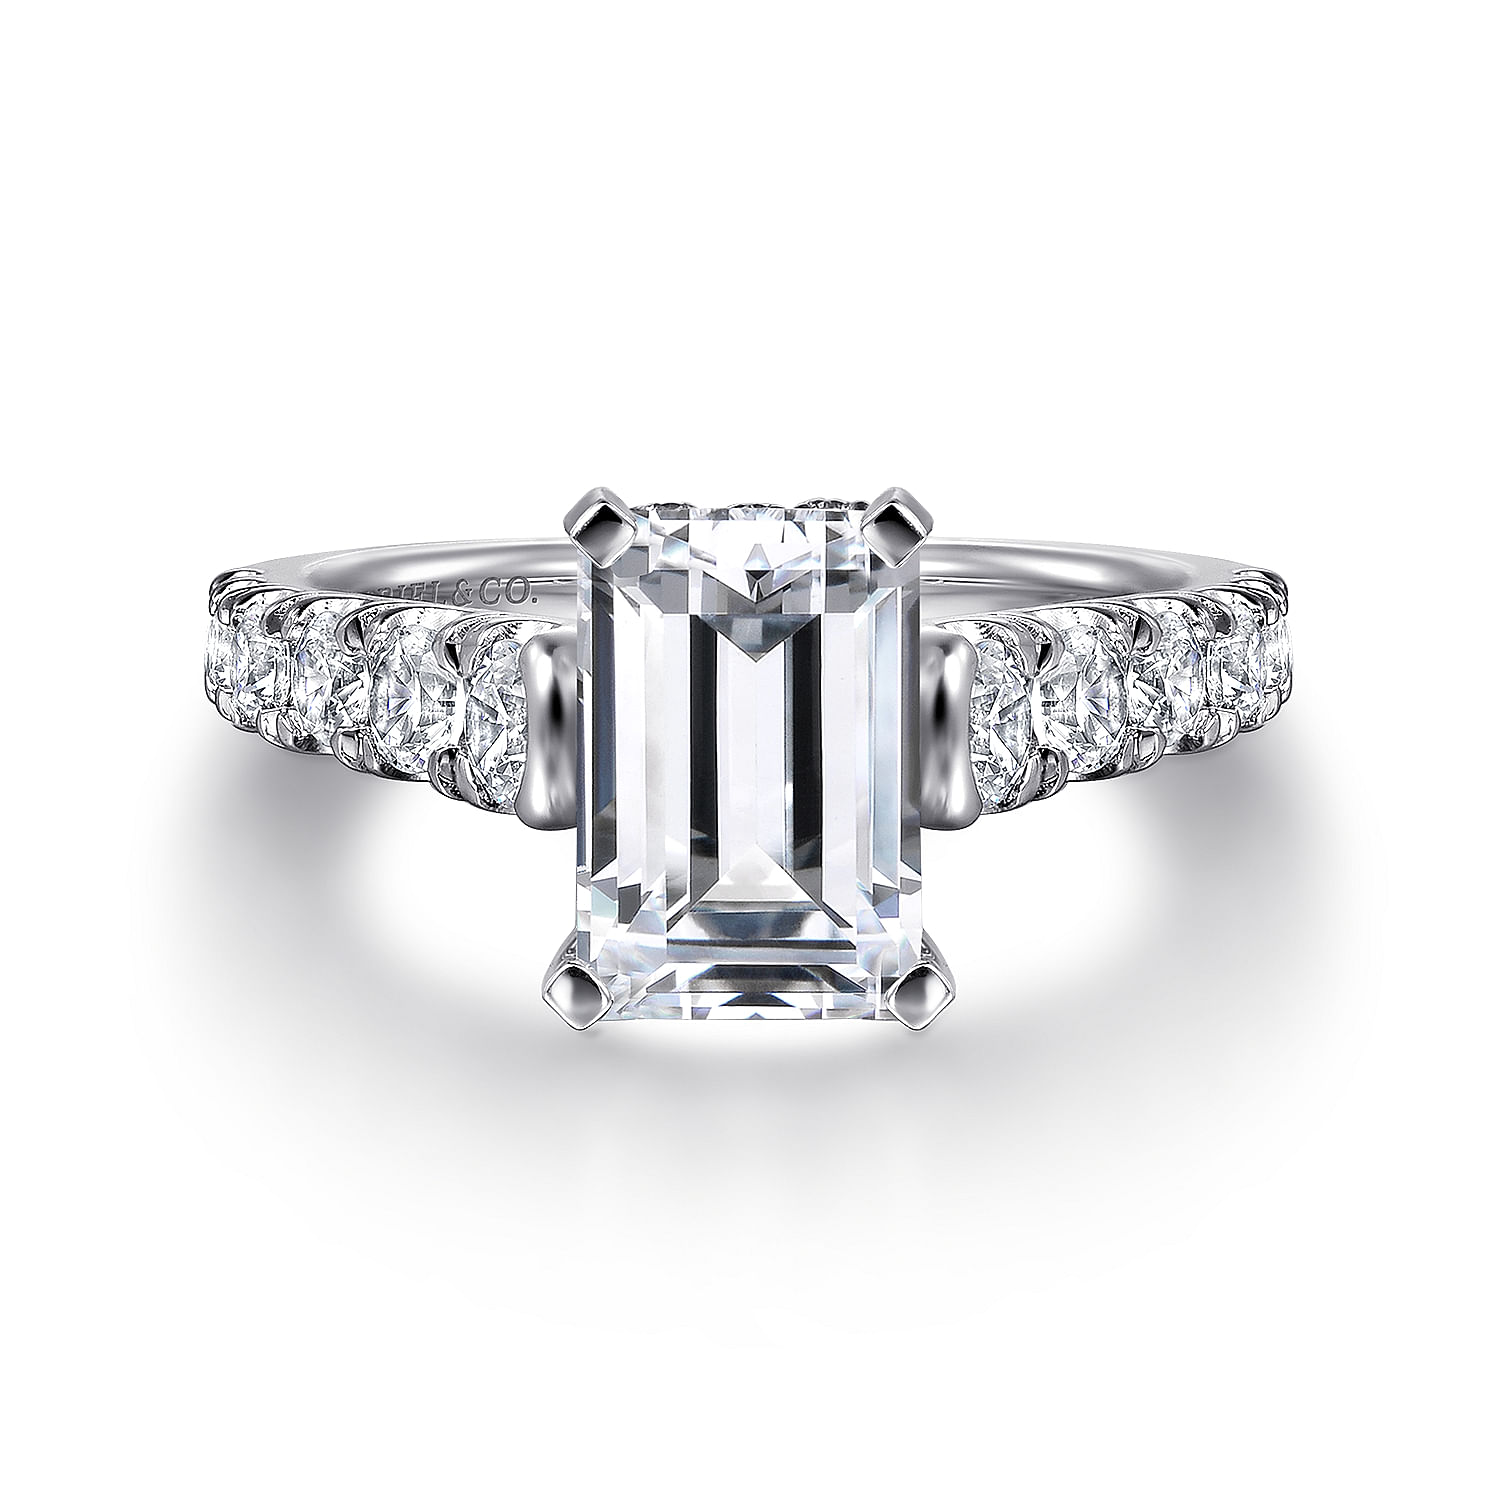 Piper---14K-White-Gold-Emerald-Cut-Diamond-Engagement-Ring1